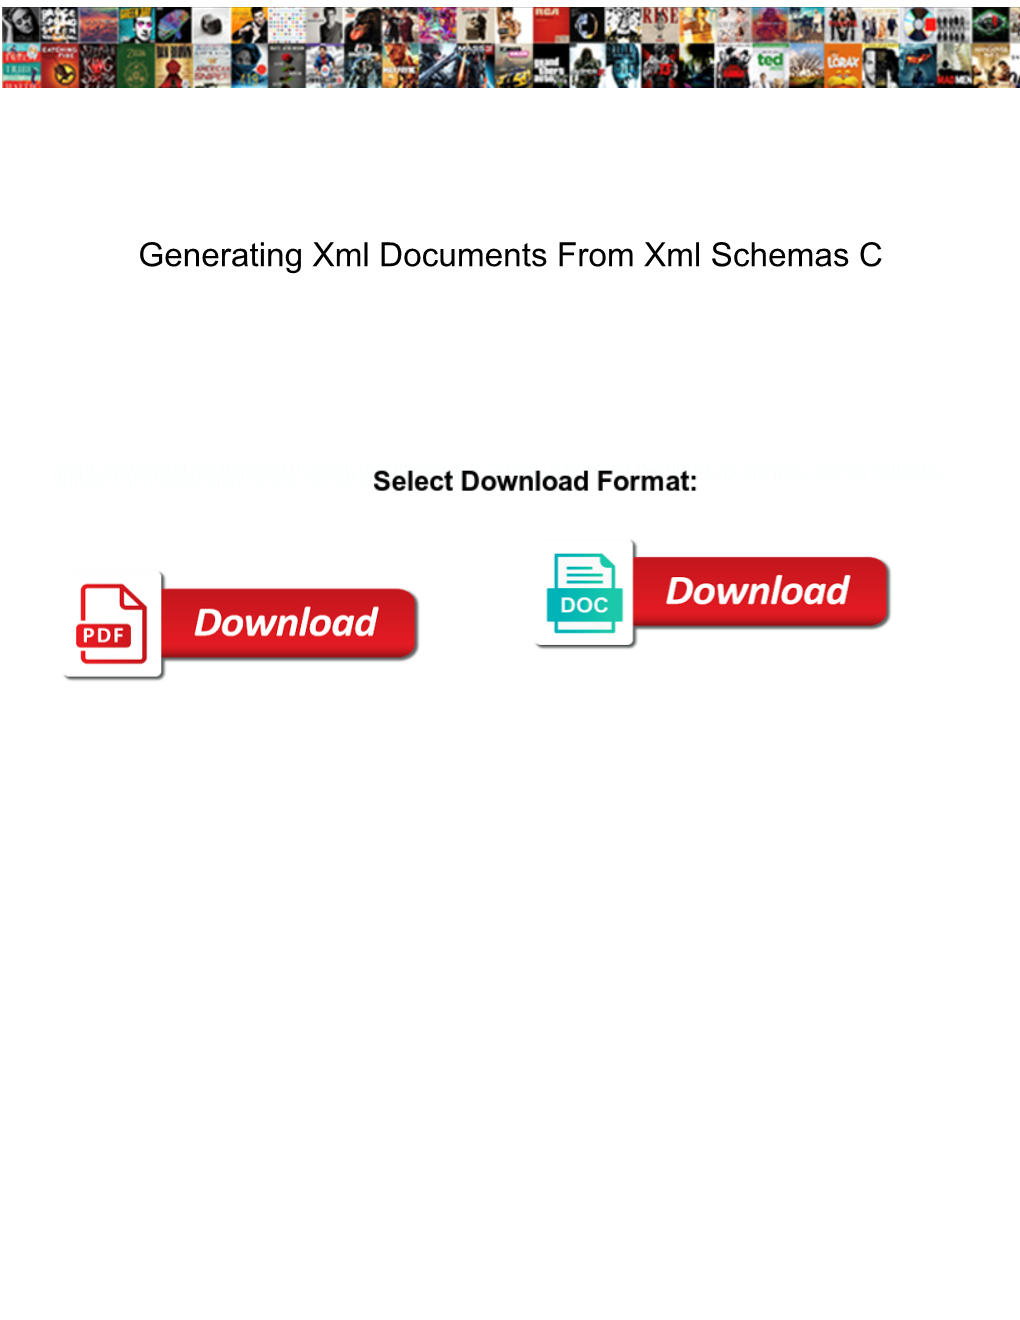 Generating Xml Documents from Xml Schemas C